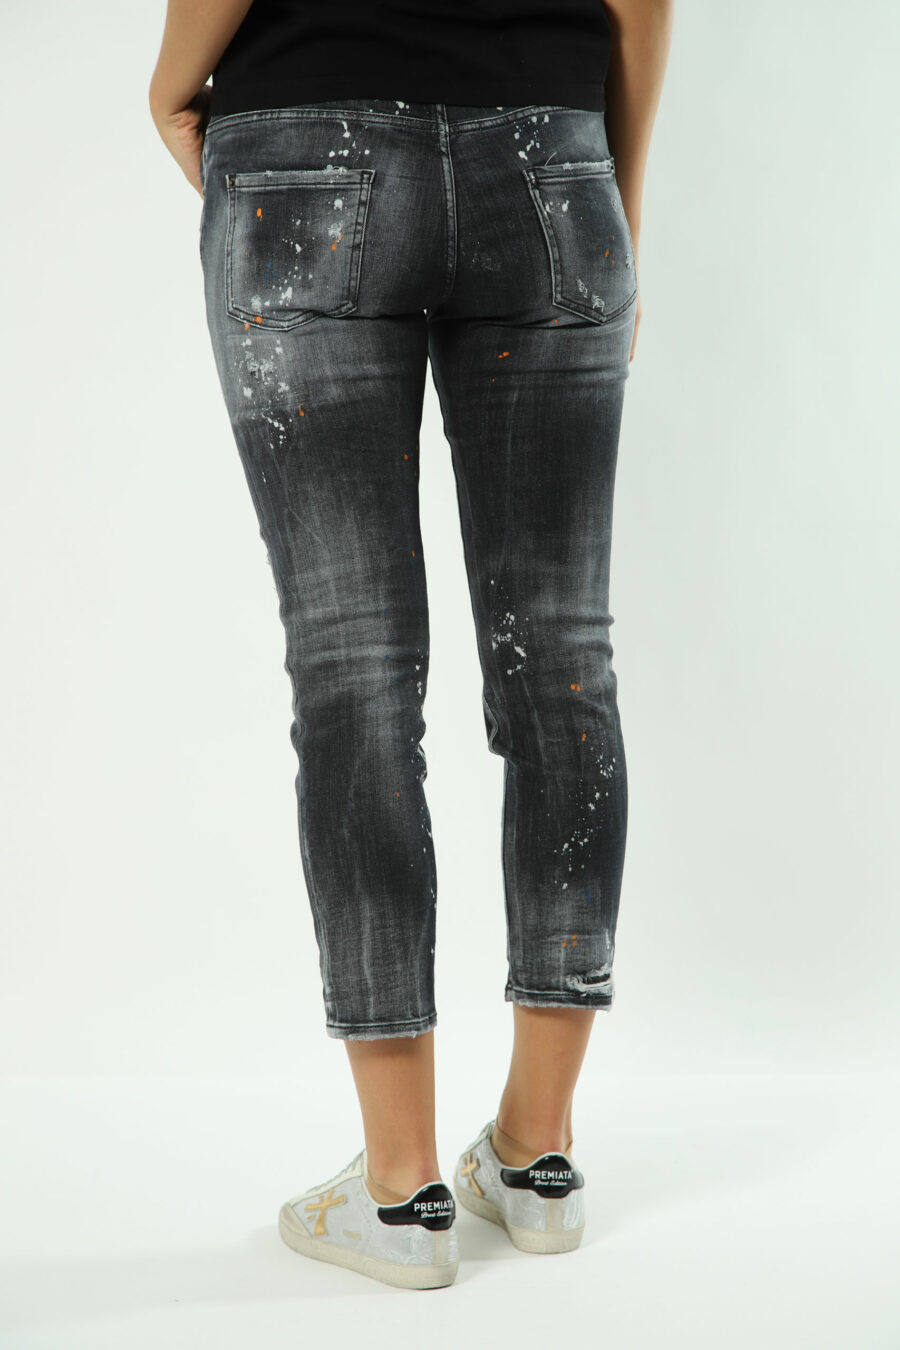 Schwarze "Cool-Girl-Jeans" mit mehrfarbiger Bemalung - Fotos 1540